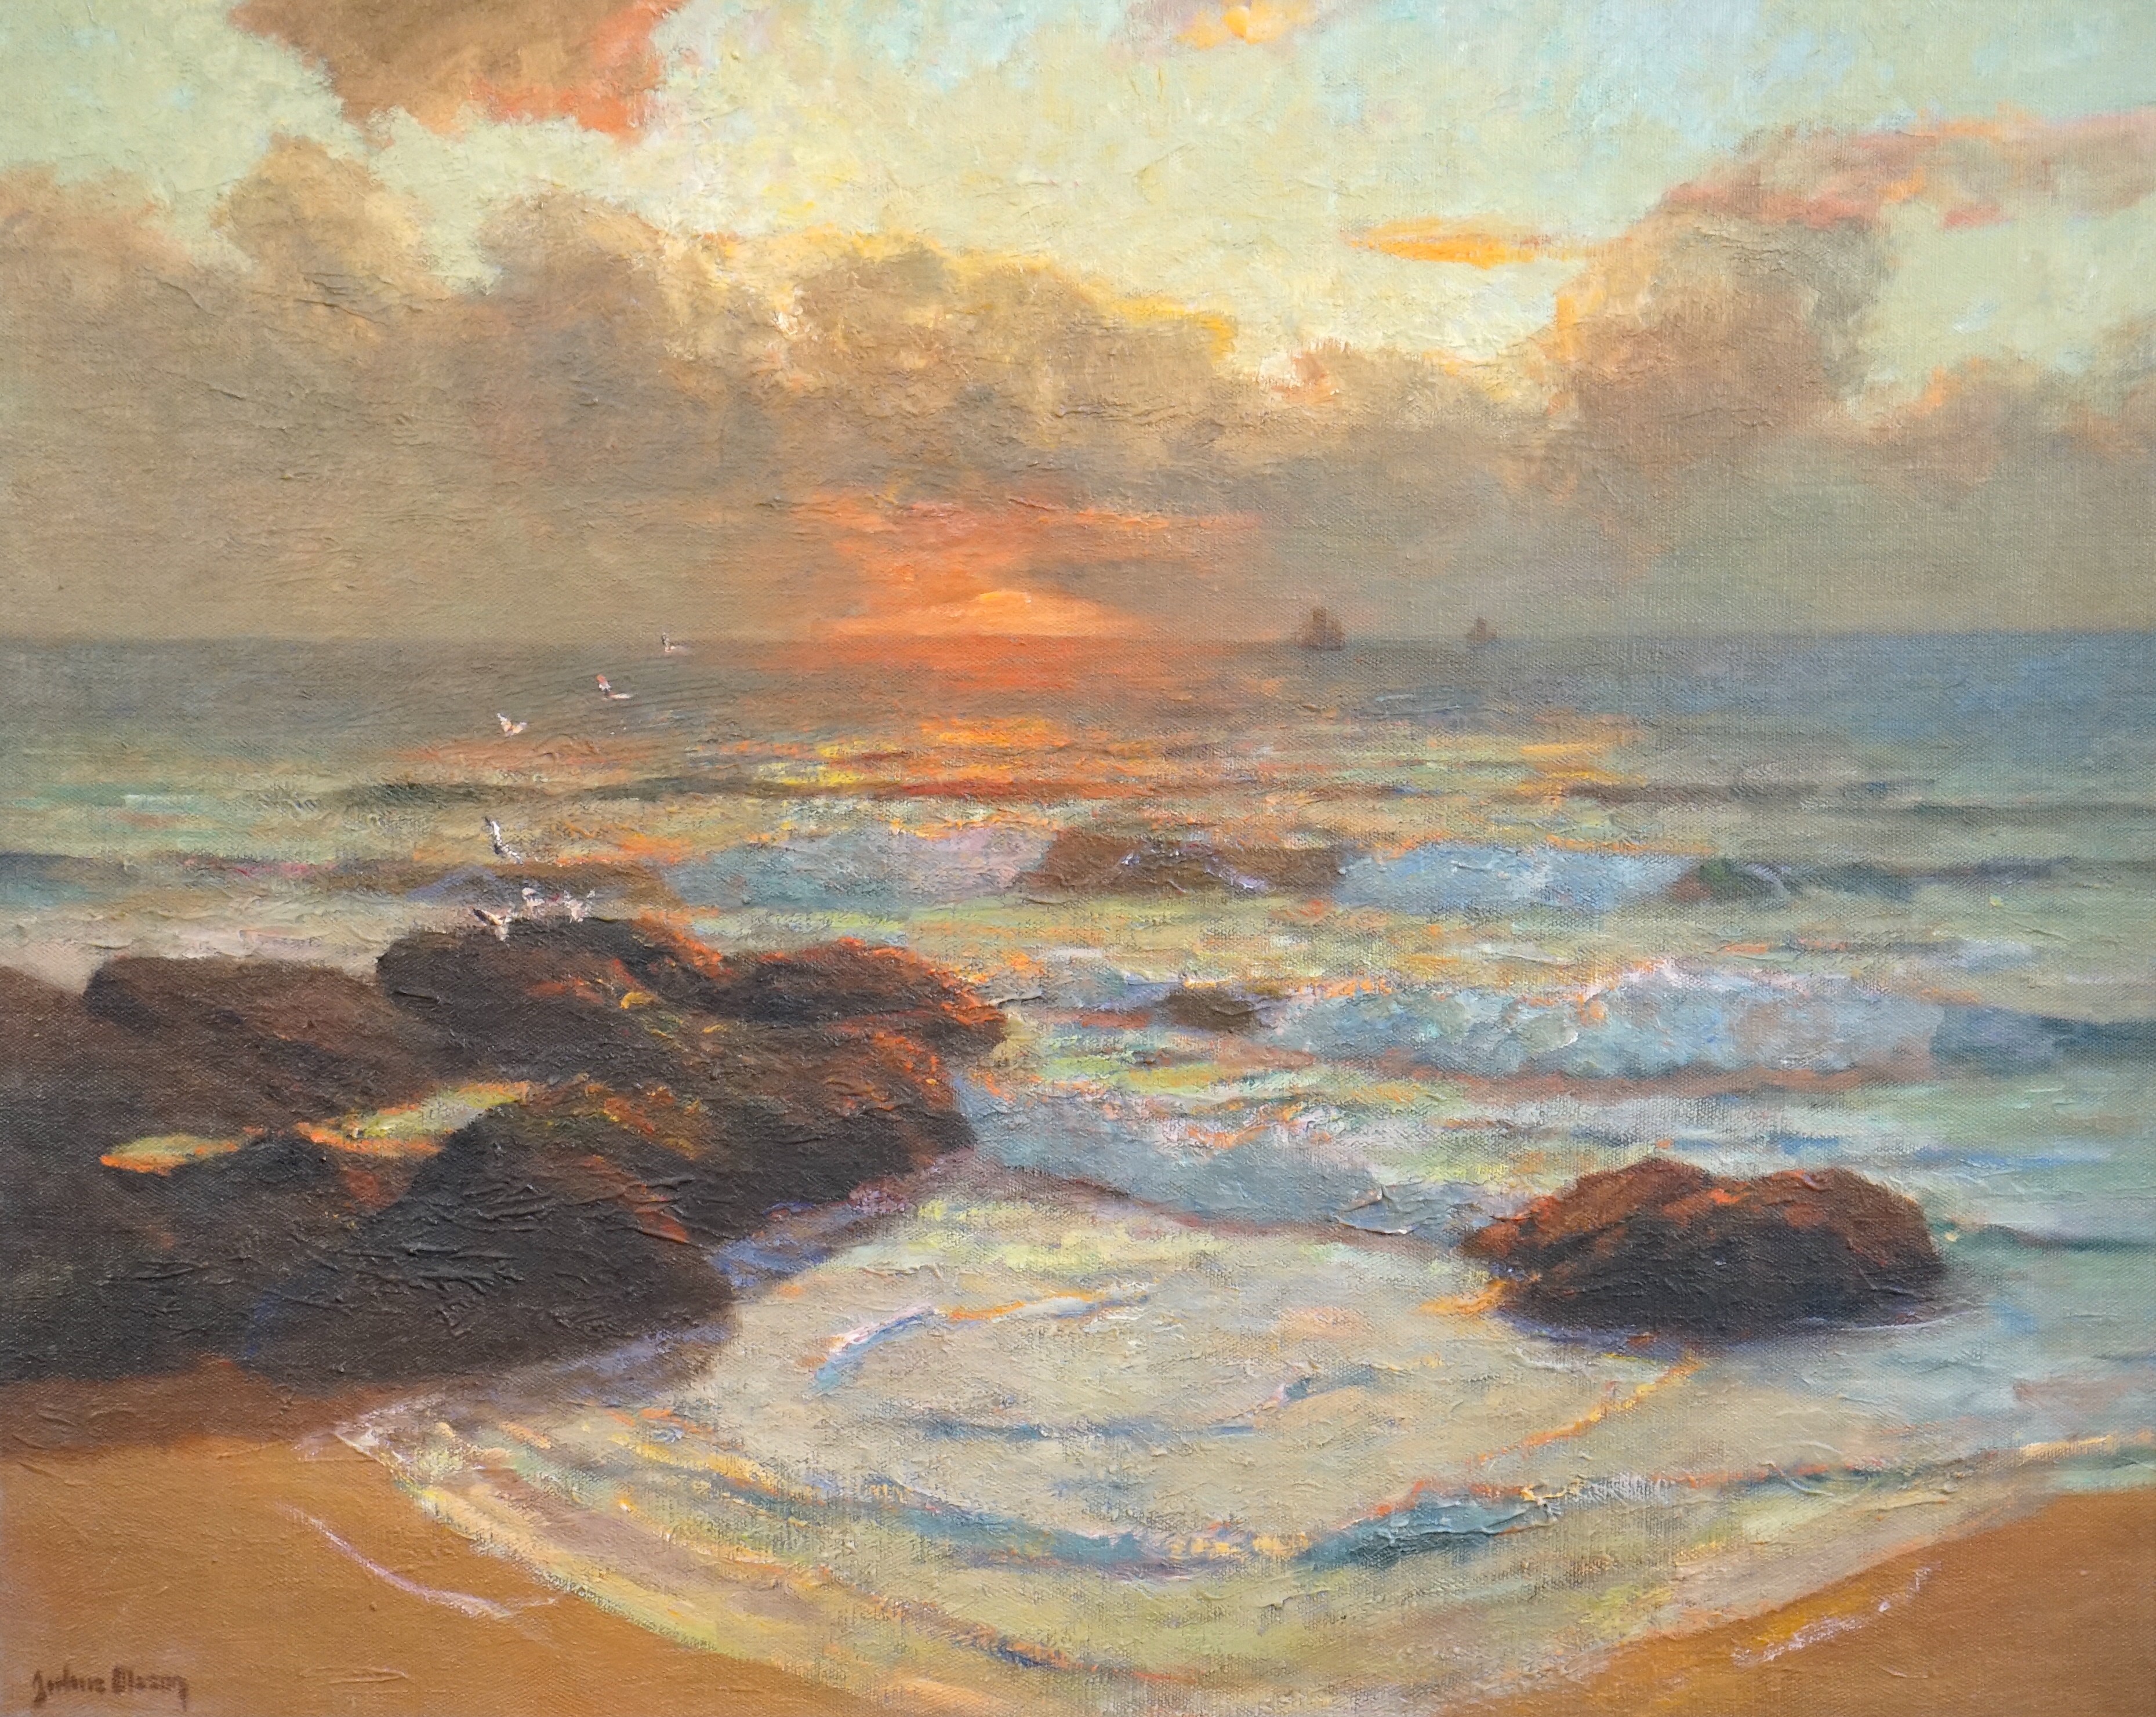 Julius Olsson RA, RBA, PROI, RWA, NEAC (British 1864-1942), 'Sunset off the Cornish coast', oil on canvas, 60 x 74cm